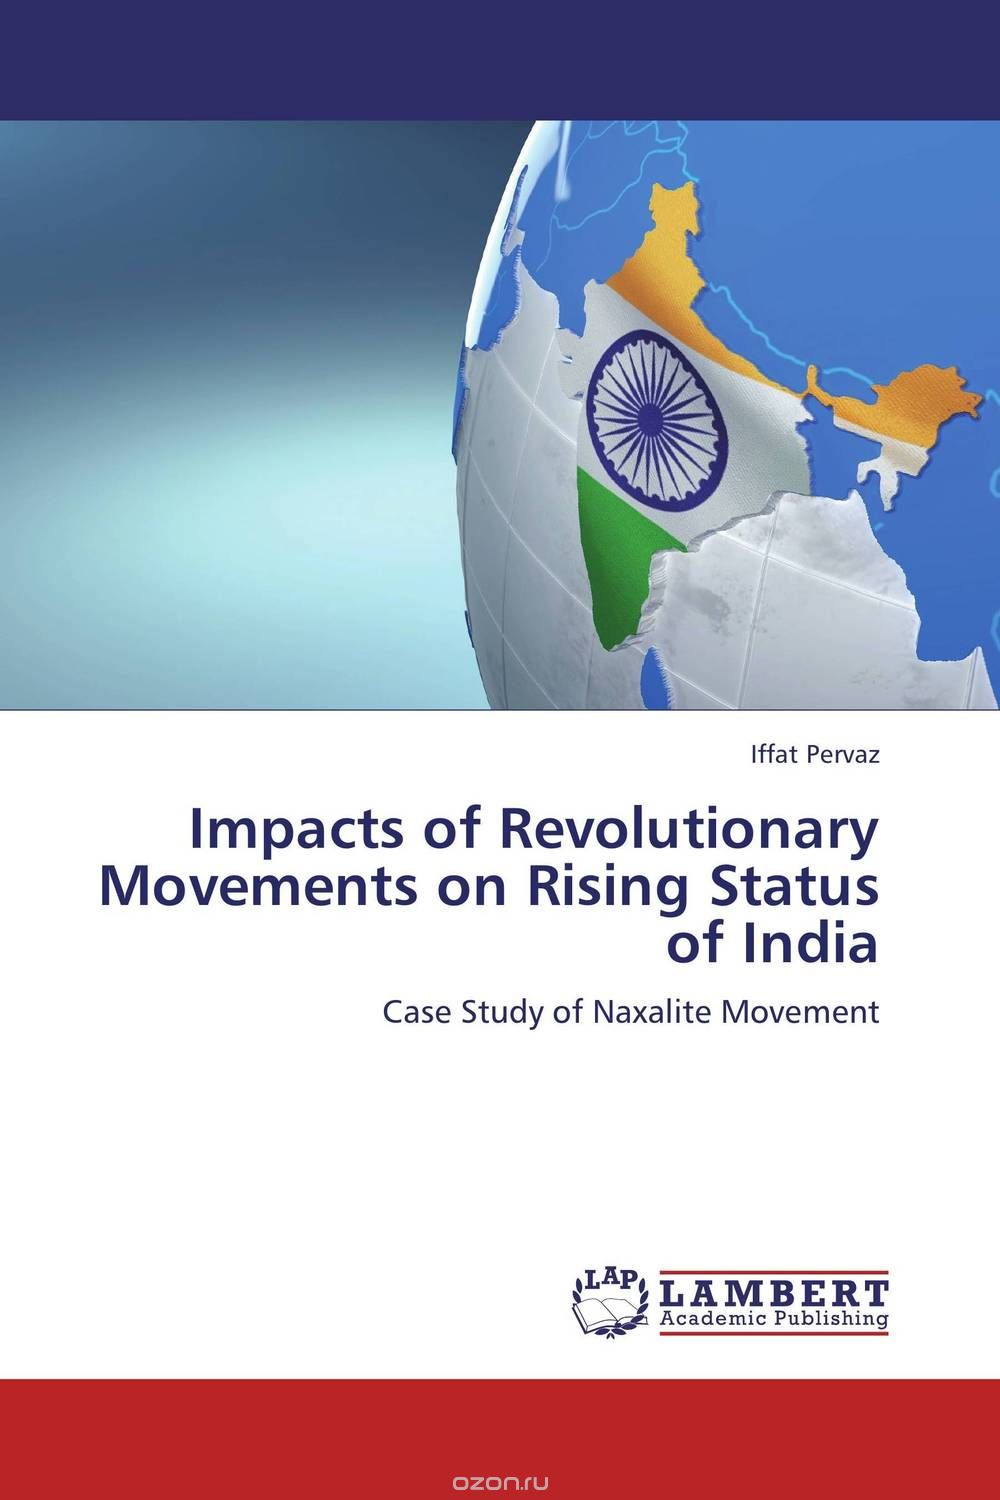 Скачать книгу "Impacts of Revolutionary Movements on Rising Status of India"